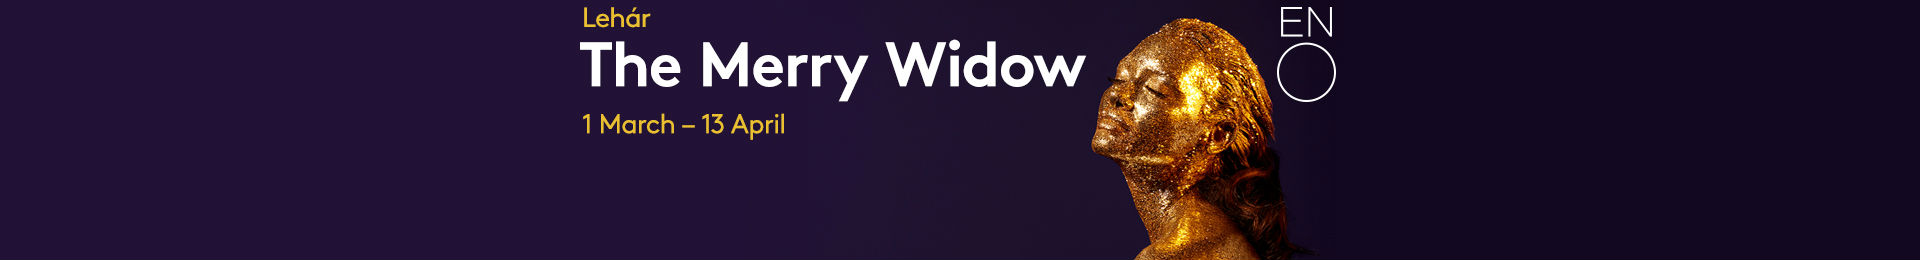 The Merry Widow tickets